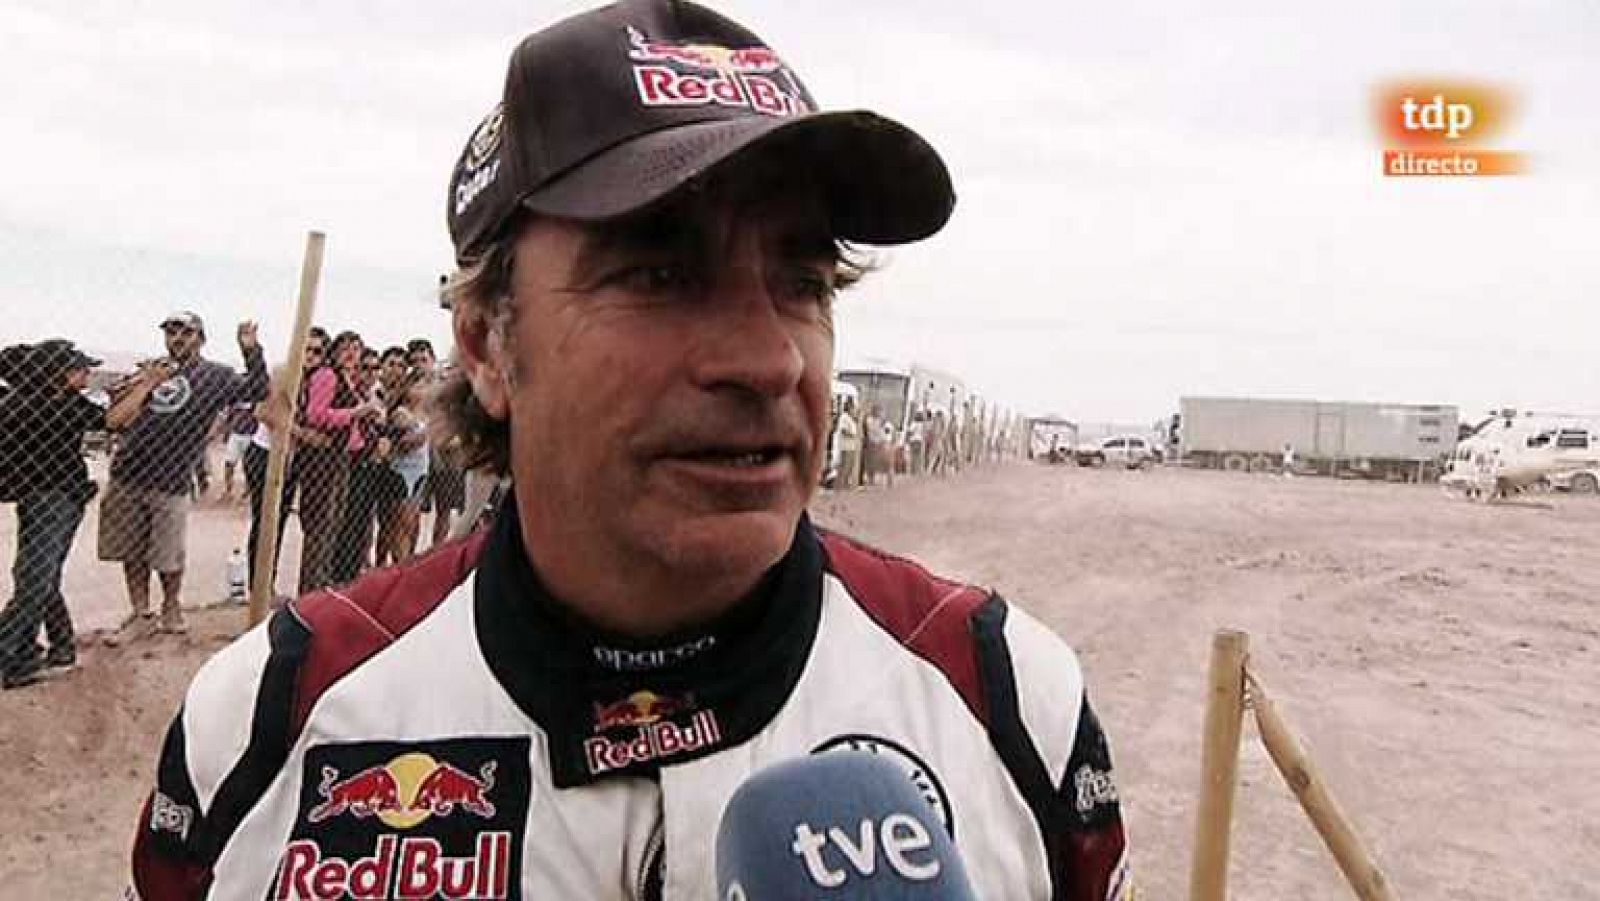 Rally Dakar 2013 - Etapa 6 (Arica - Calama) - 10/01/13 - Ver ahora